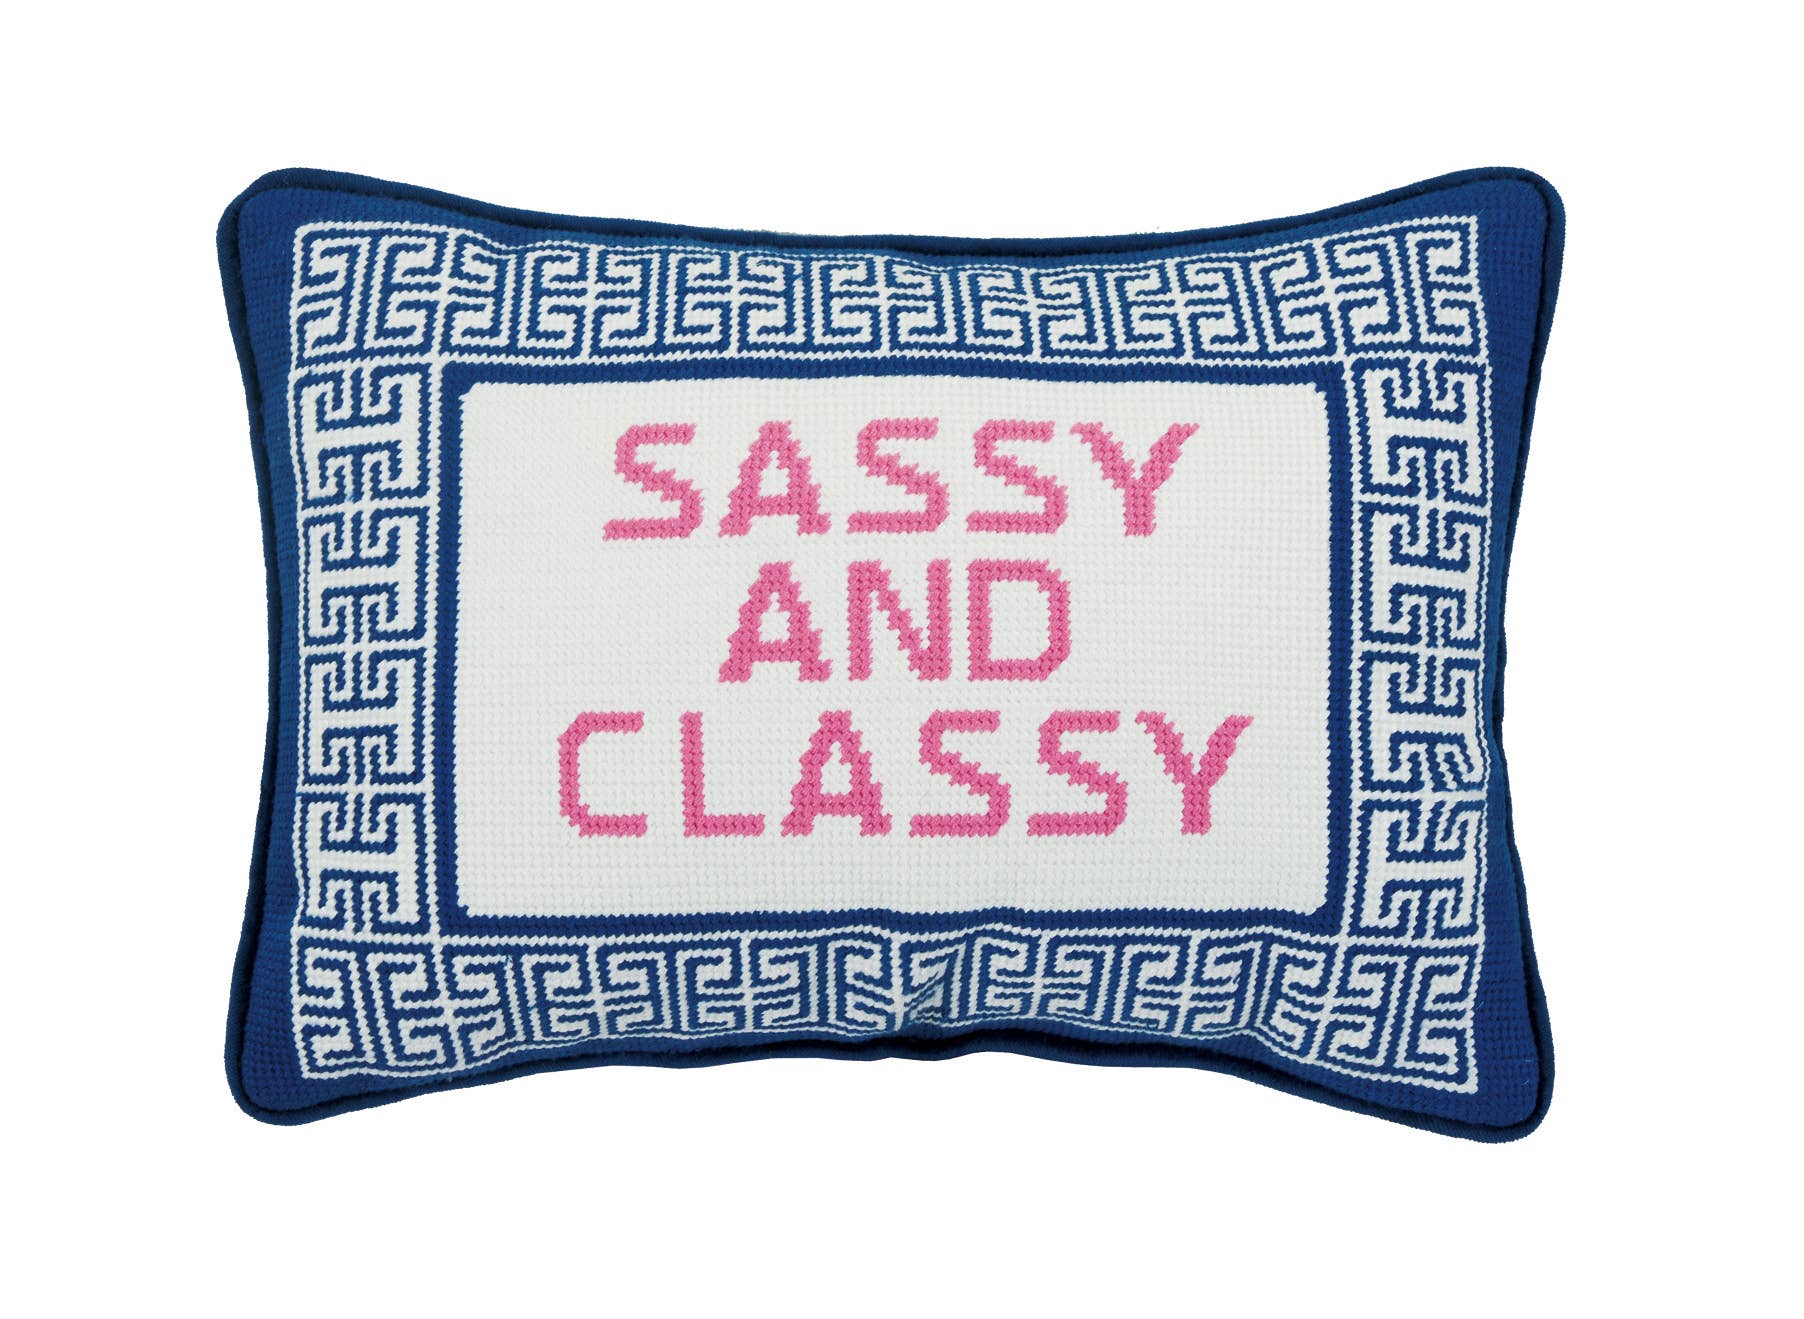 Sassy And Classy Needlepoint Pillow